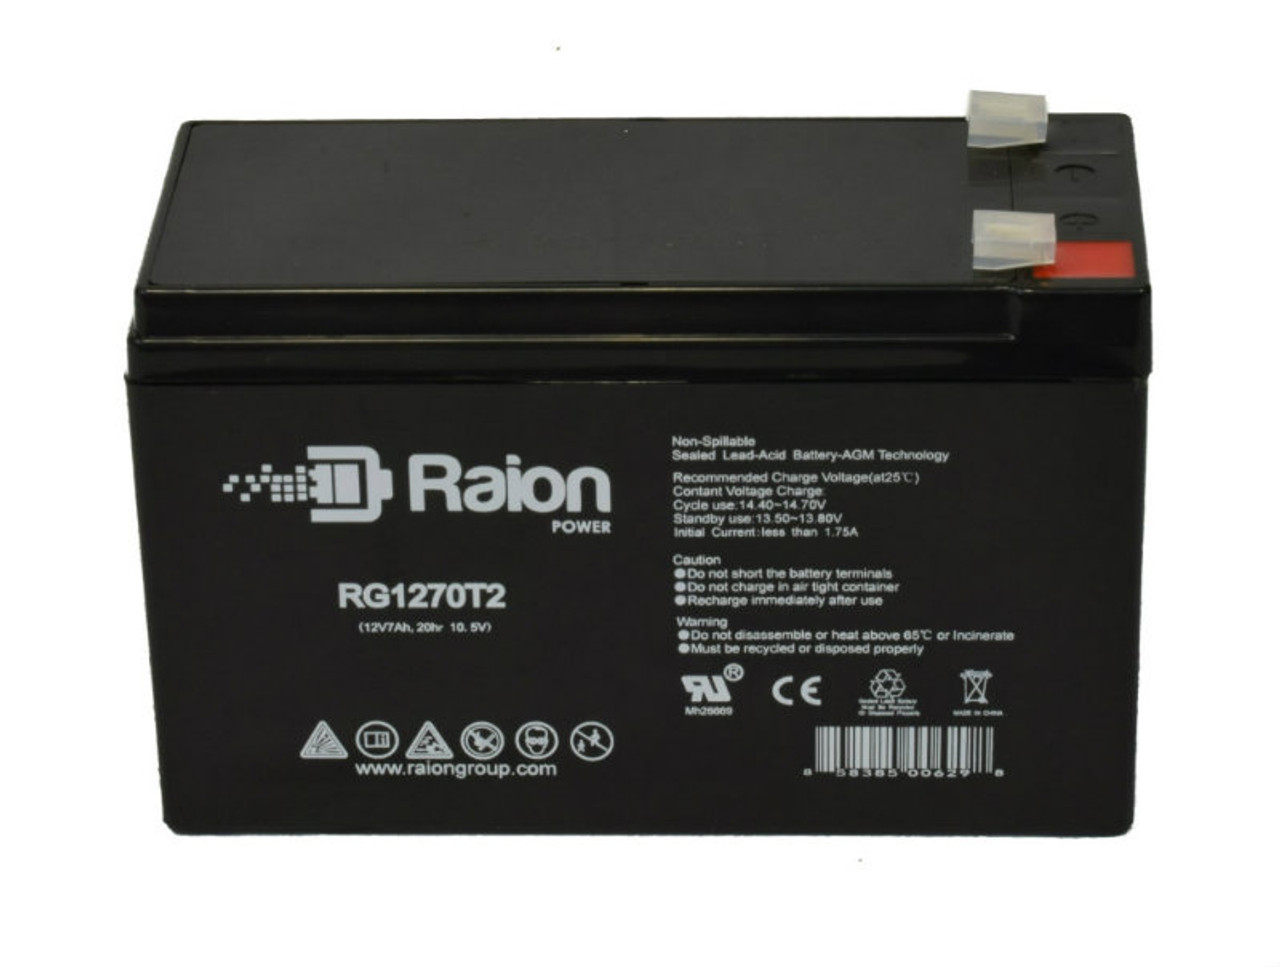 Raion Power RG1270T1 12V 7Ah Lead Acid Battery for Vision CP1270M